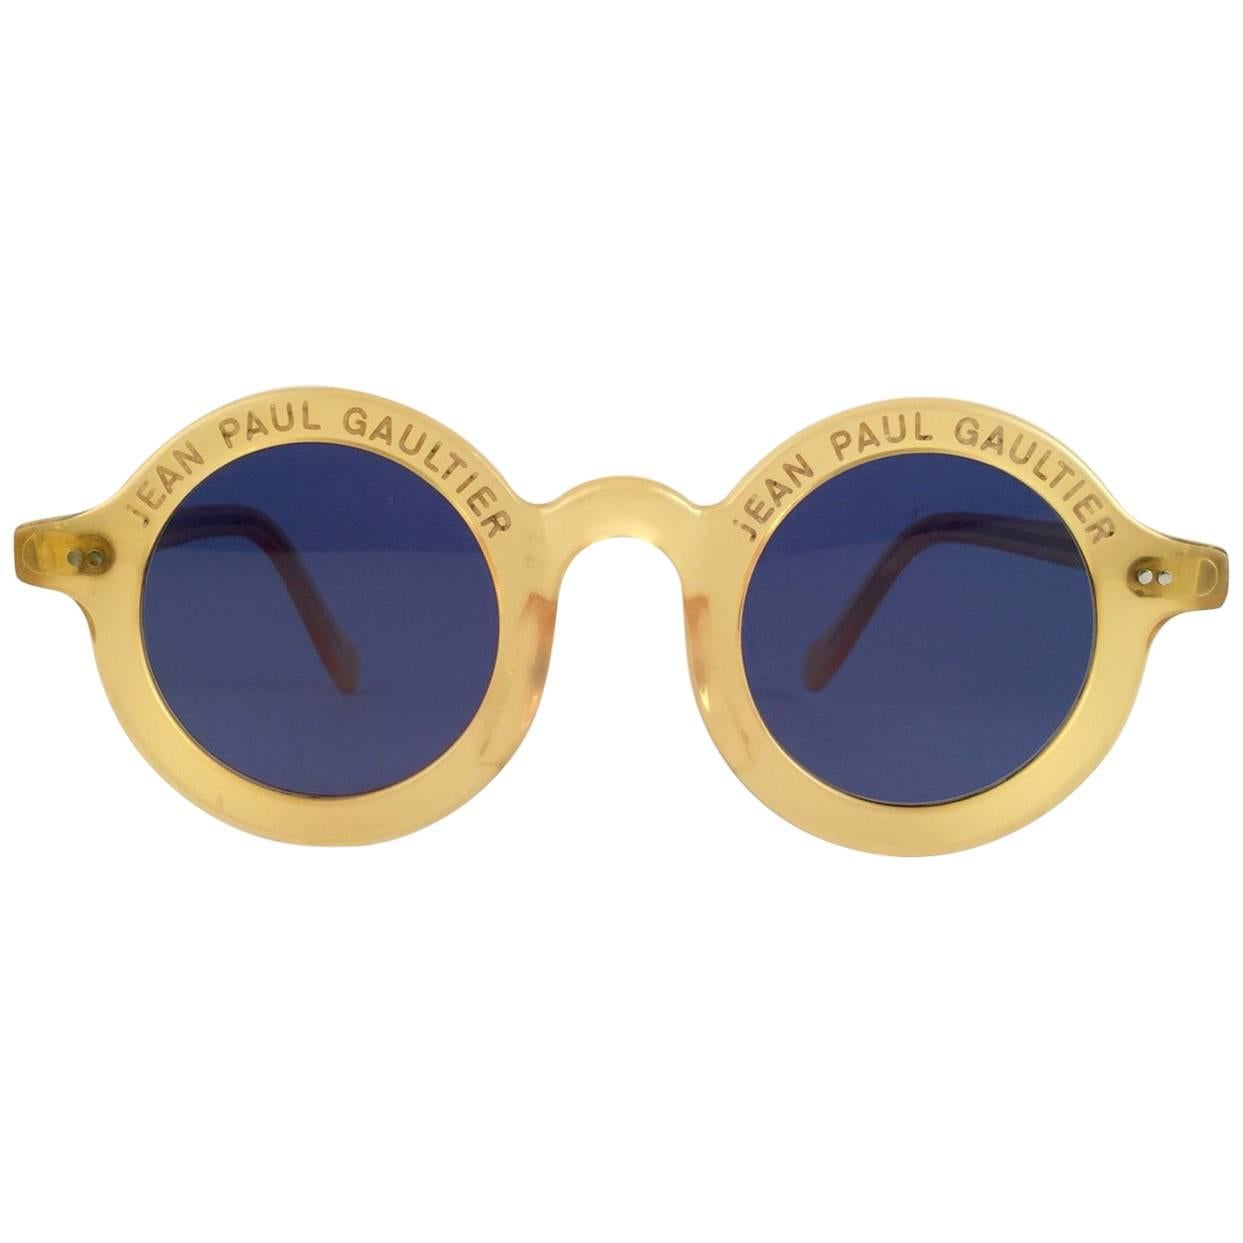 New Jean Paul Gaultier 56 0071 Round Yellow Iconic 90's Japan JPG Sunglasses